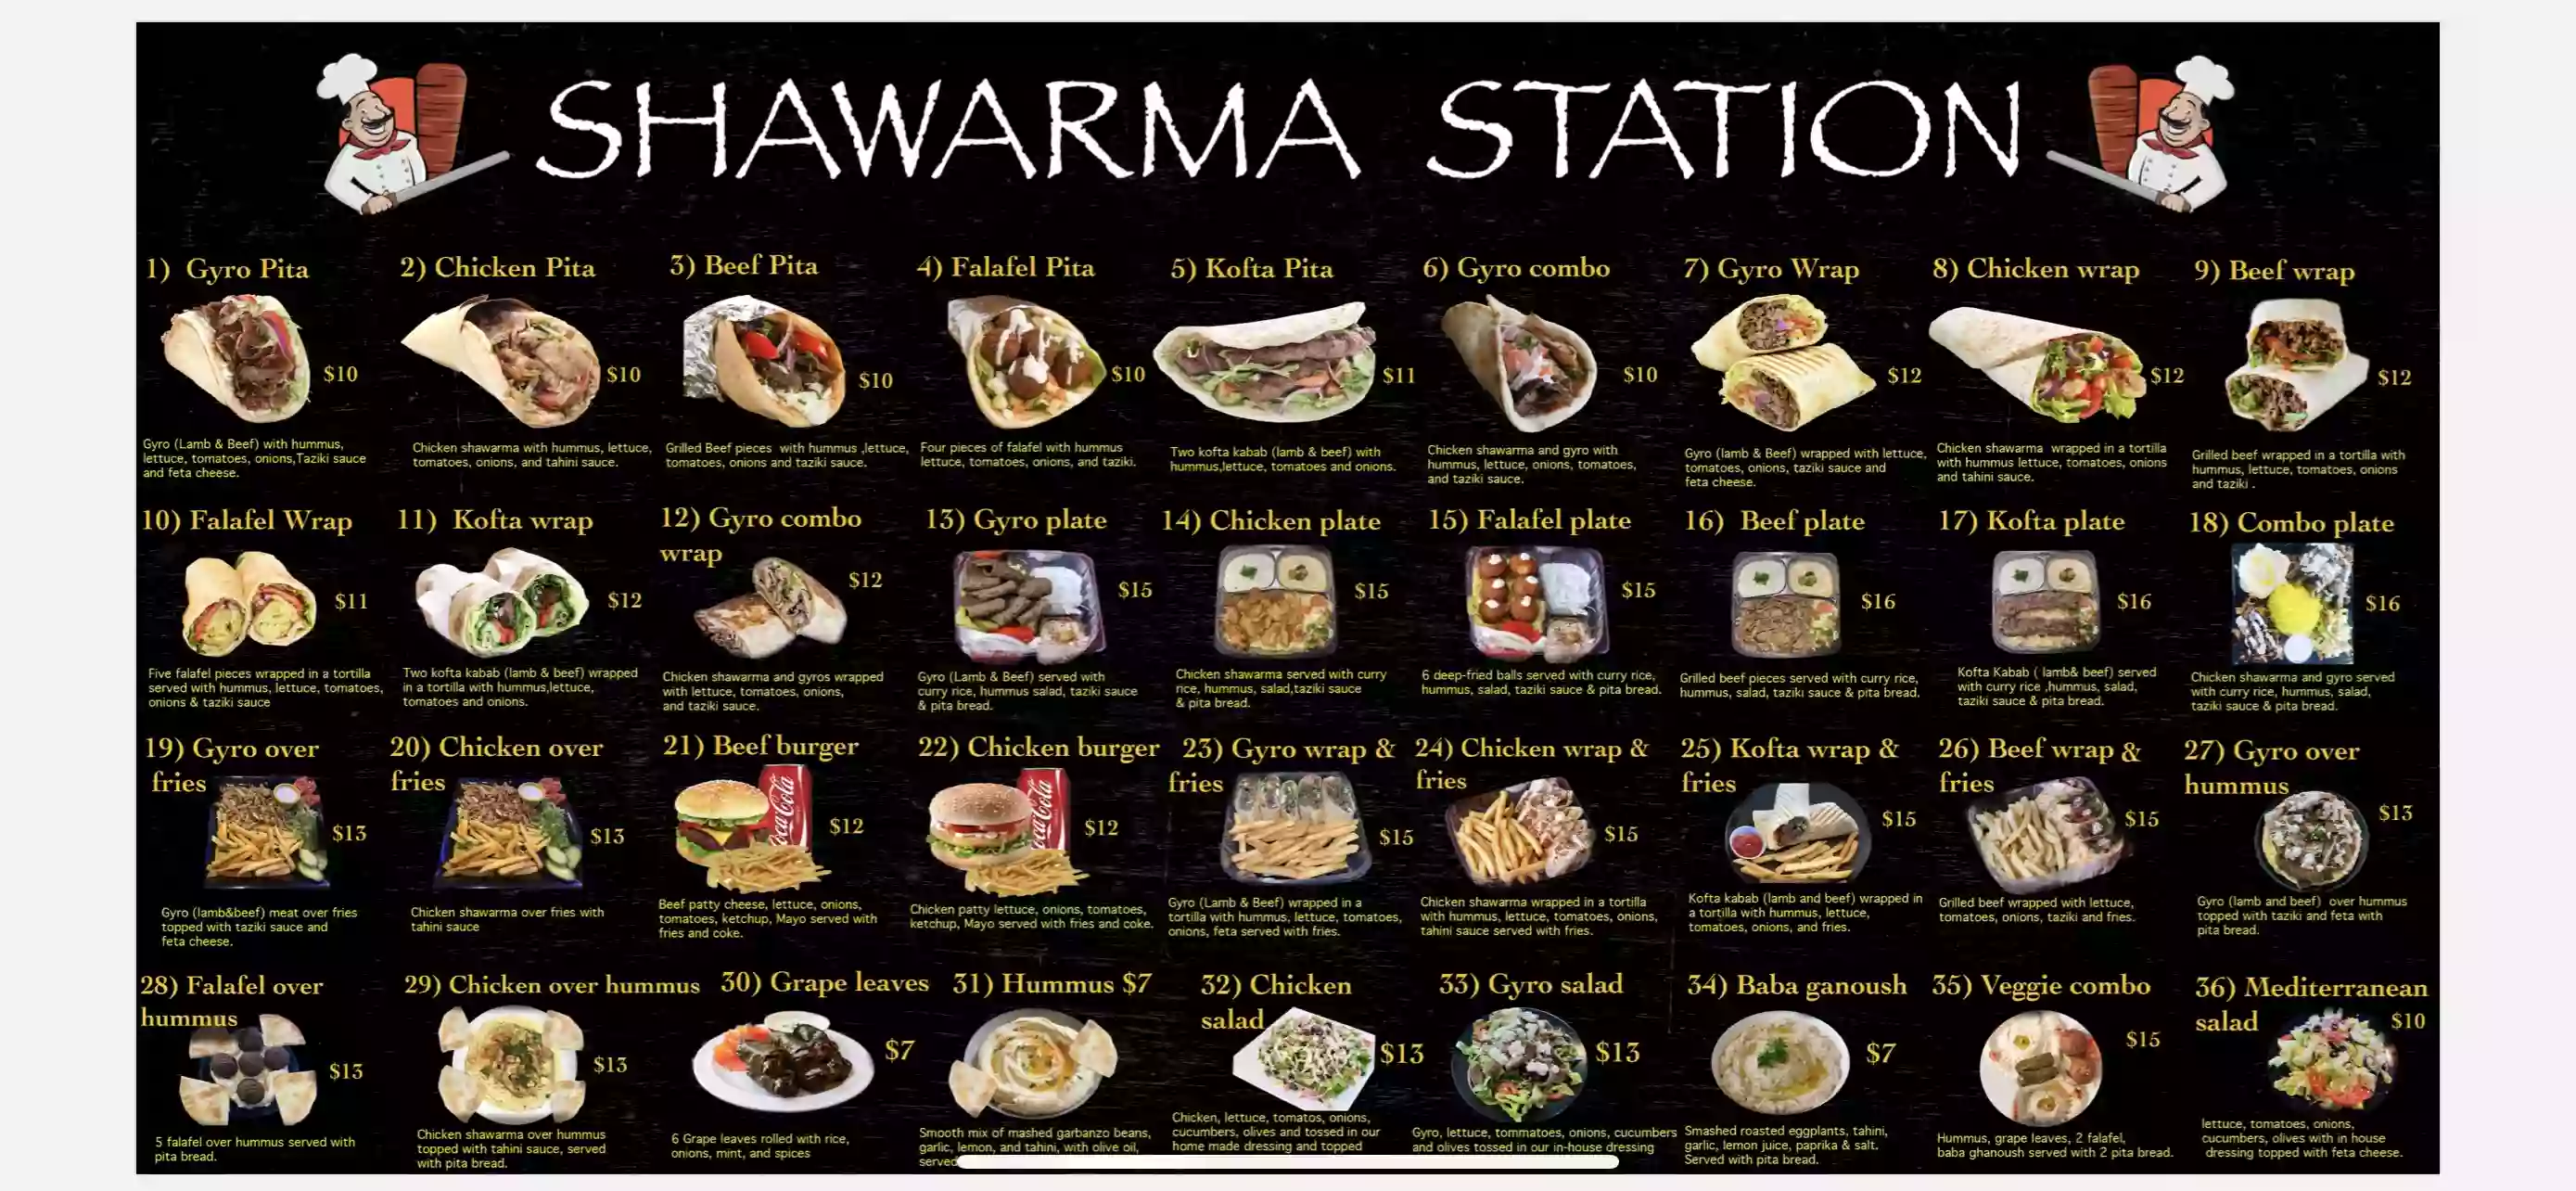 Shawarma station